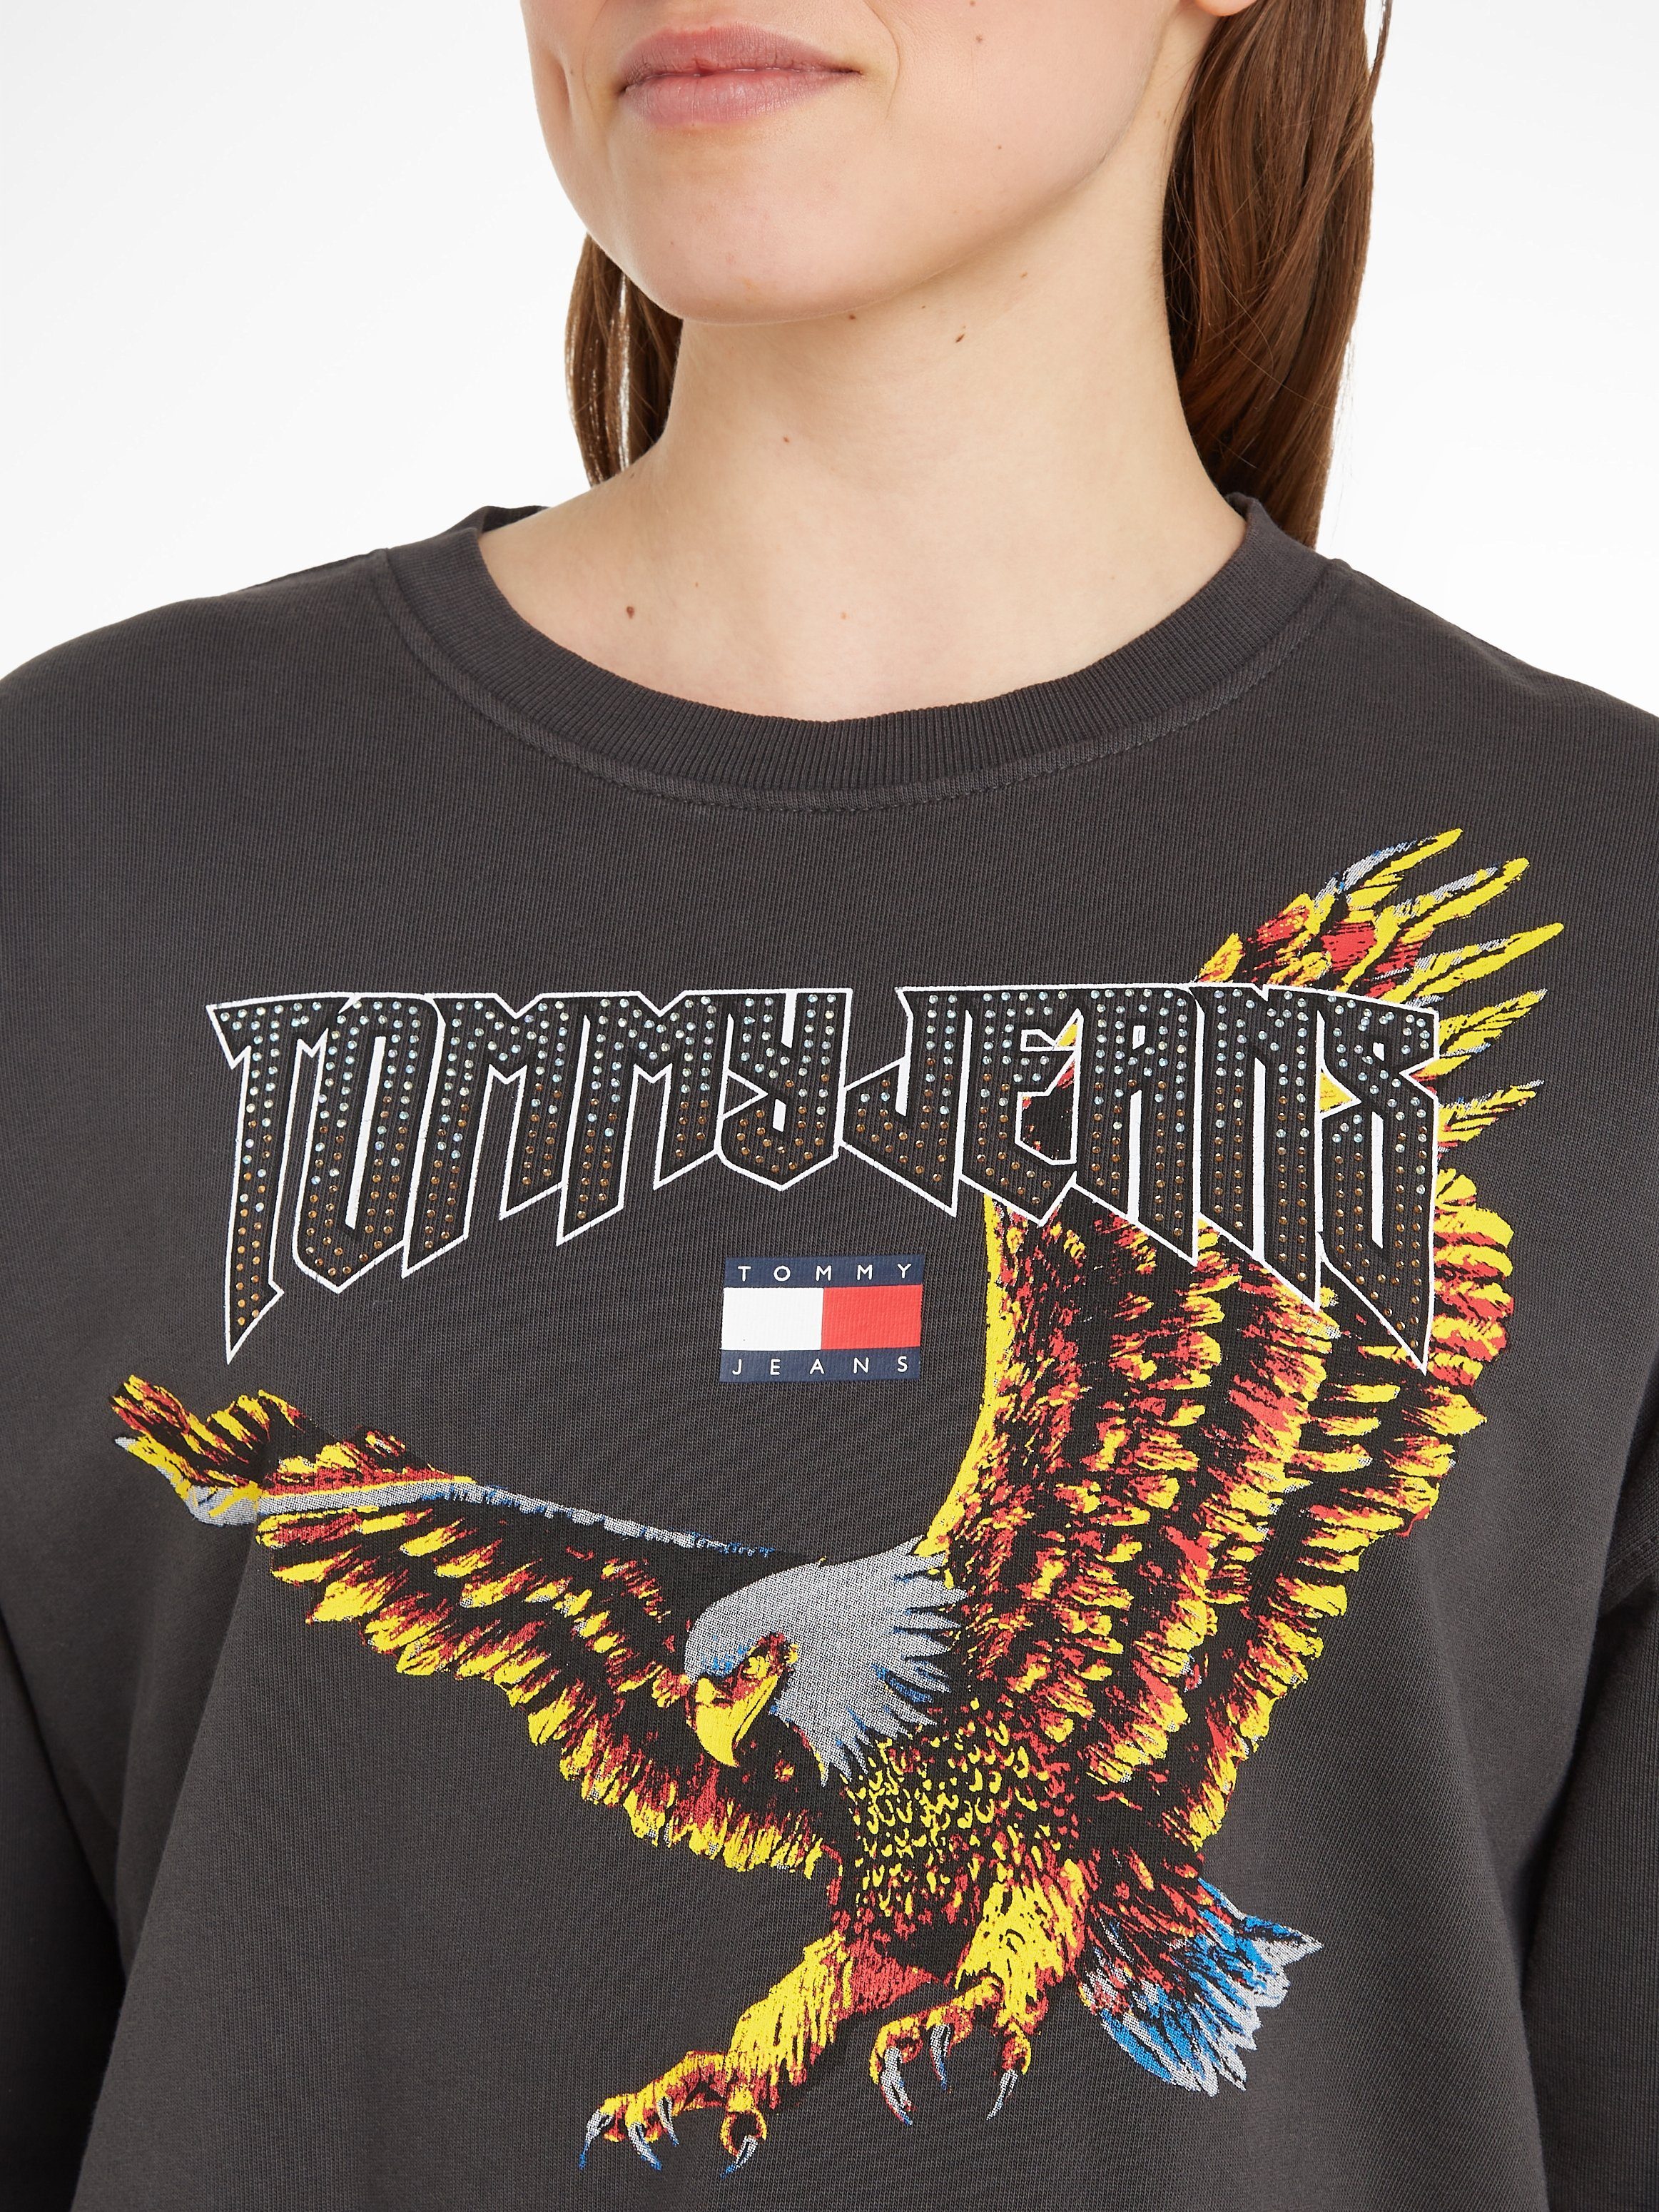 TOMMY JEANS Sweatshirt TJW RLX CRP VINTAGE EAGLE CREW met coole vintage adelaar print used sweat-look